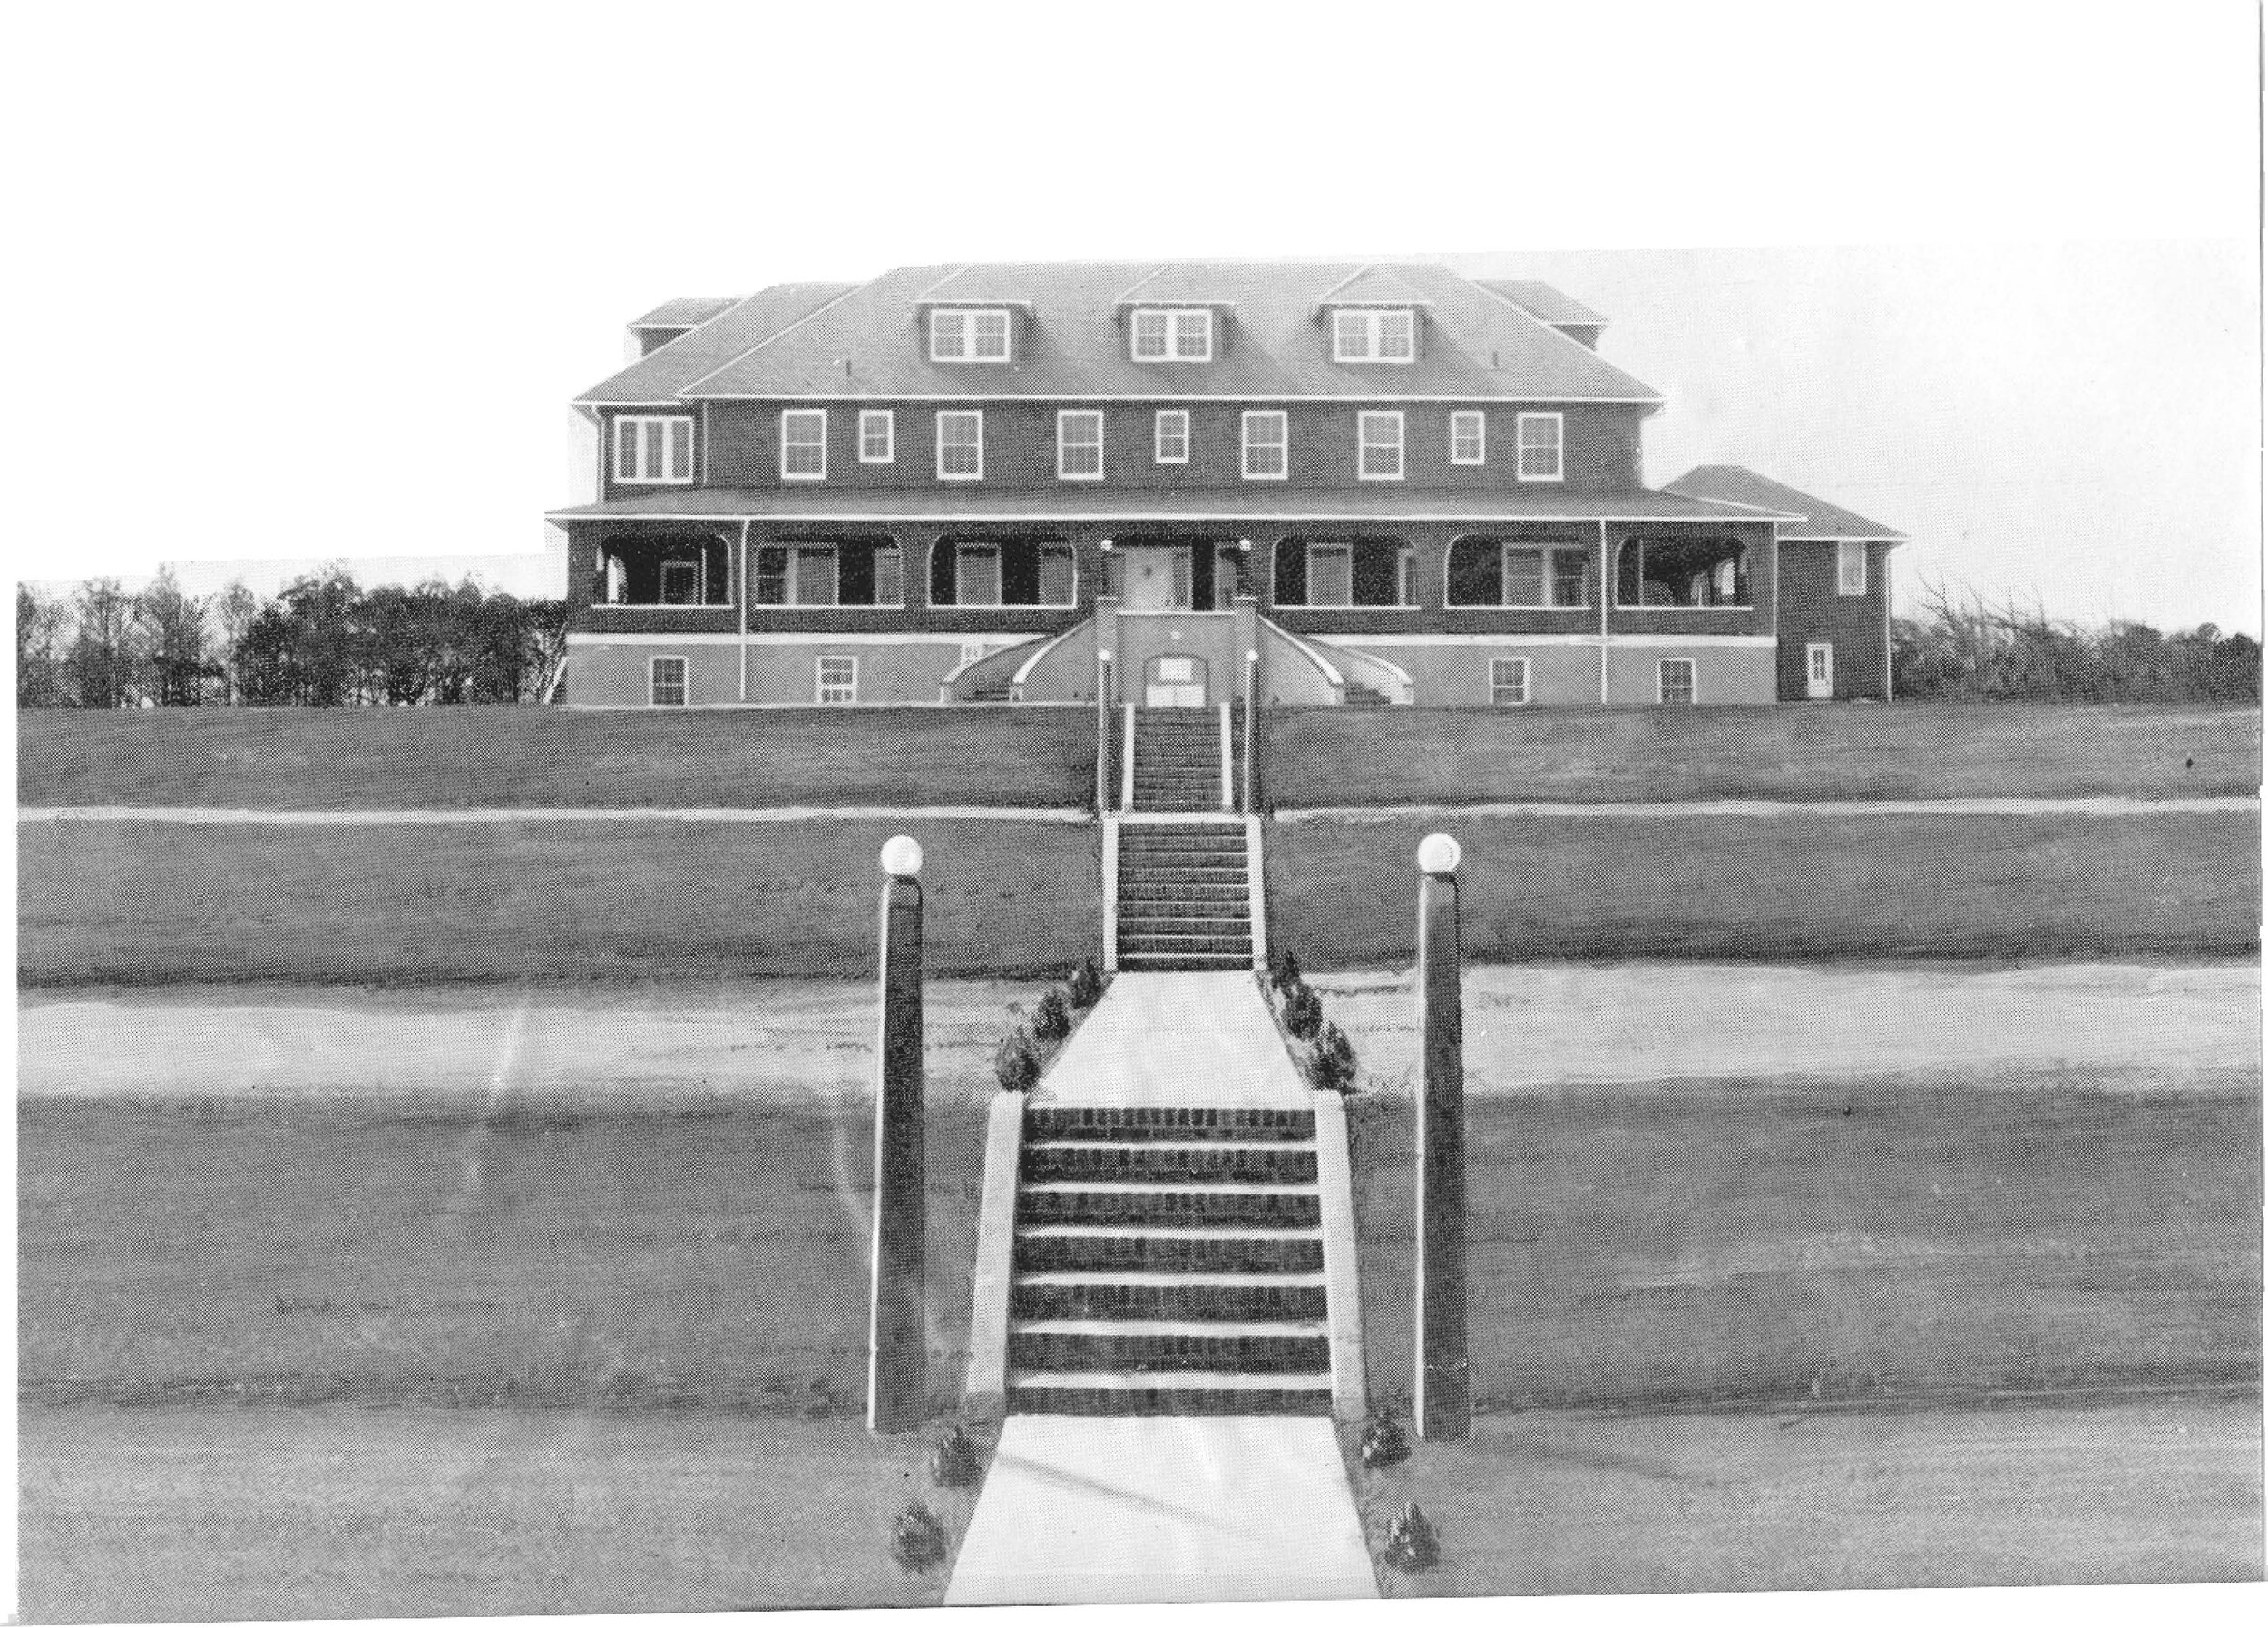  Original hospital building, circa 1929.   Used by permission–Edgar Cayce Foundation–Virginia Beach, VA; EdgarCayce.org.  